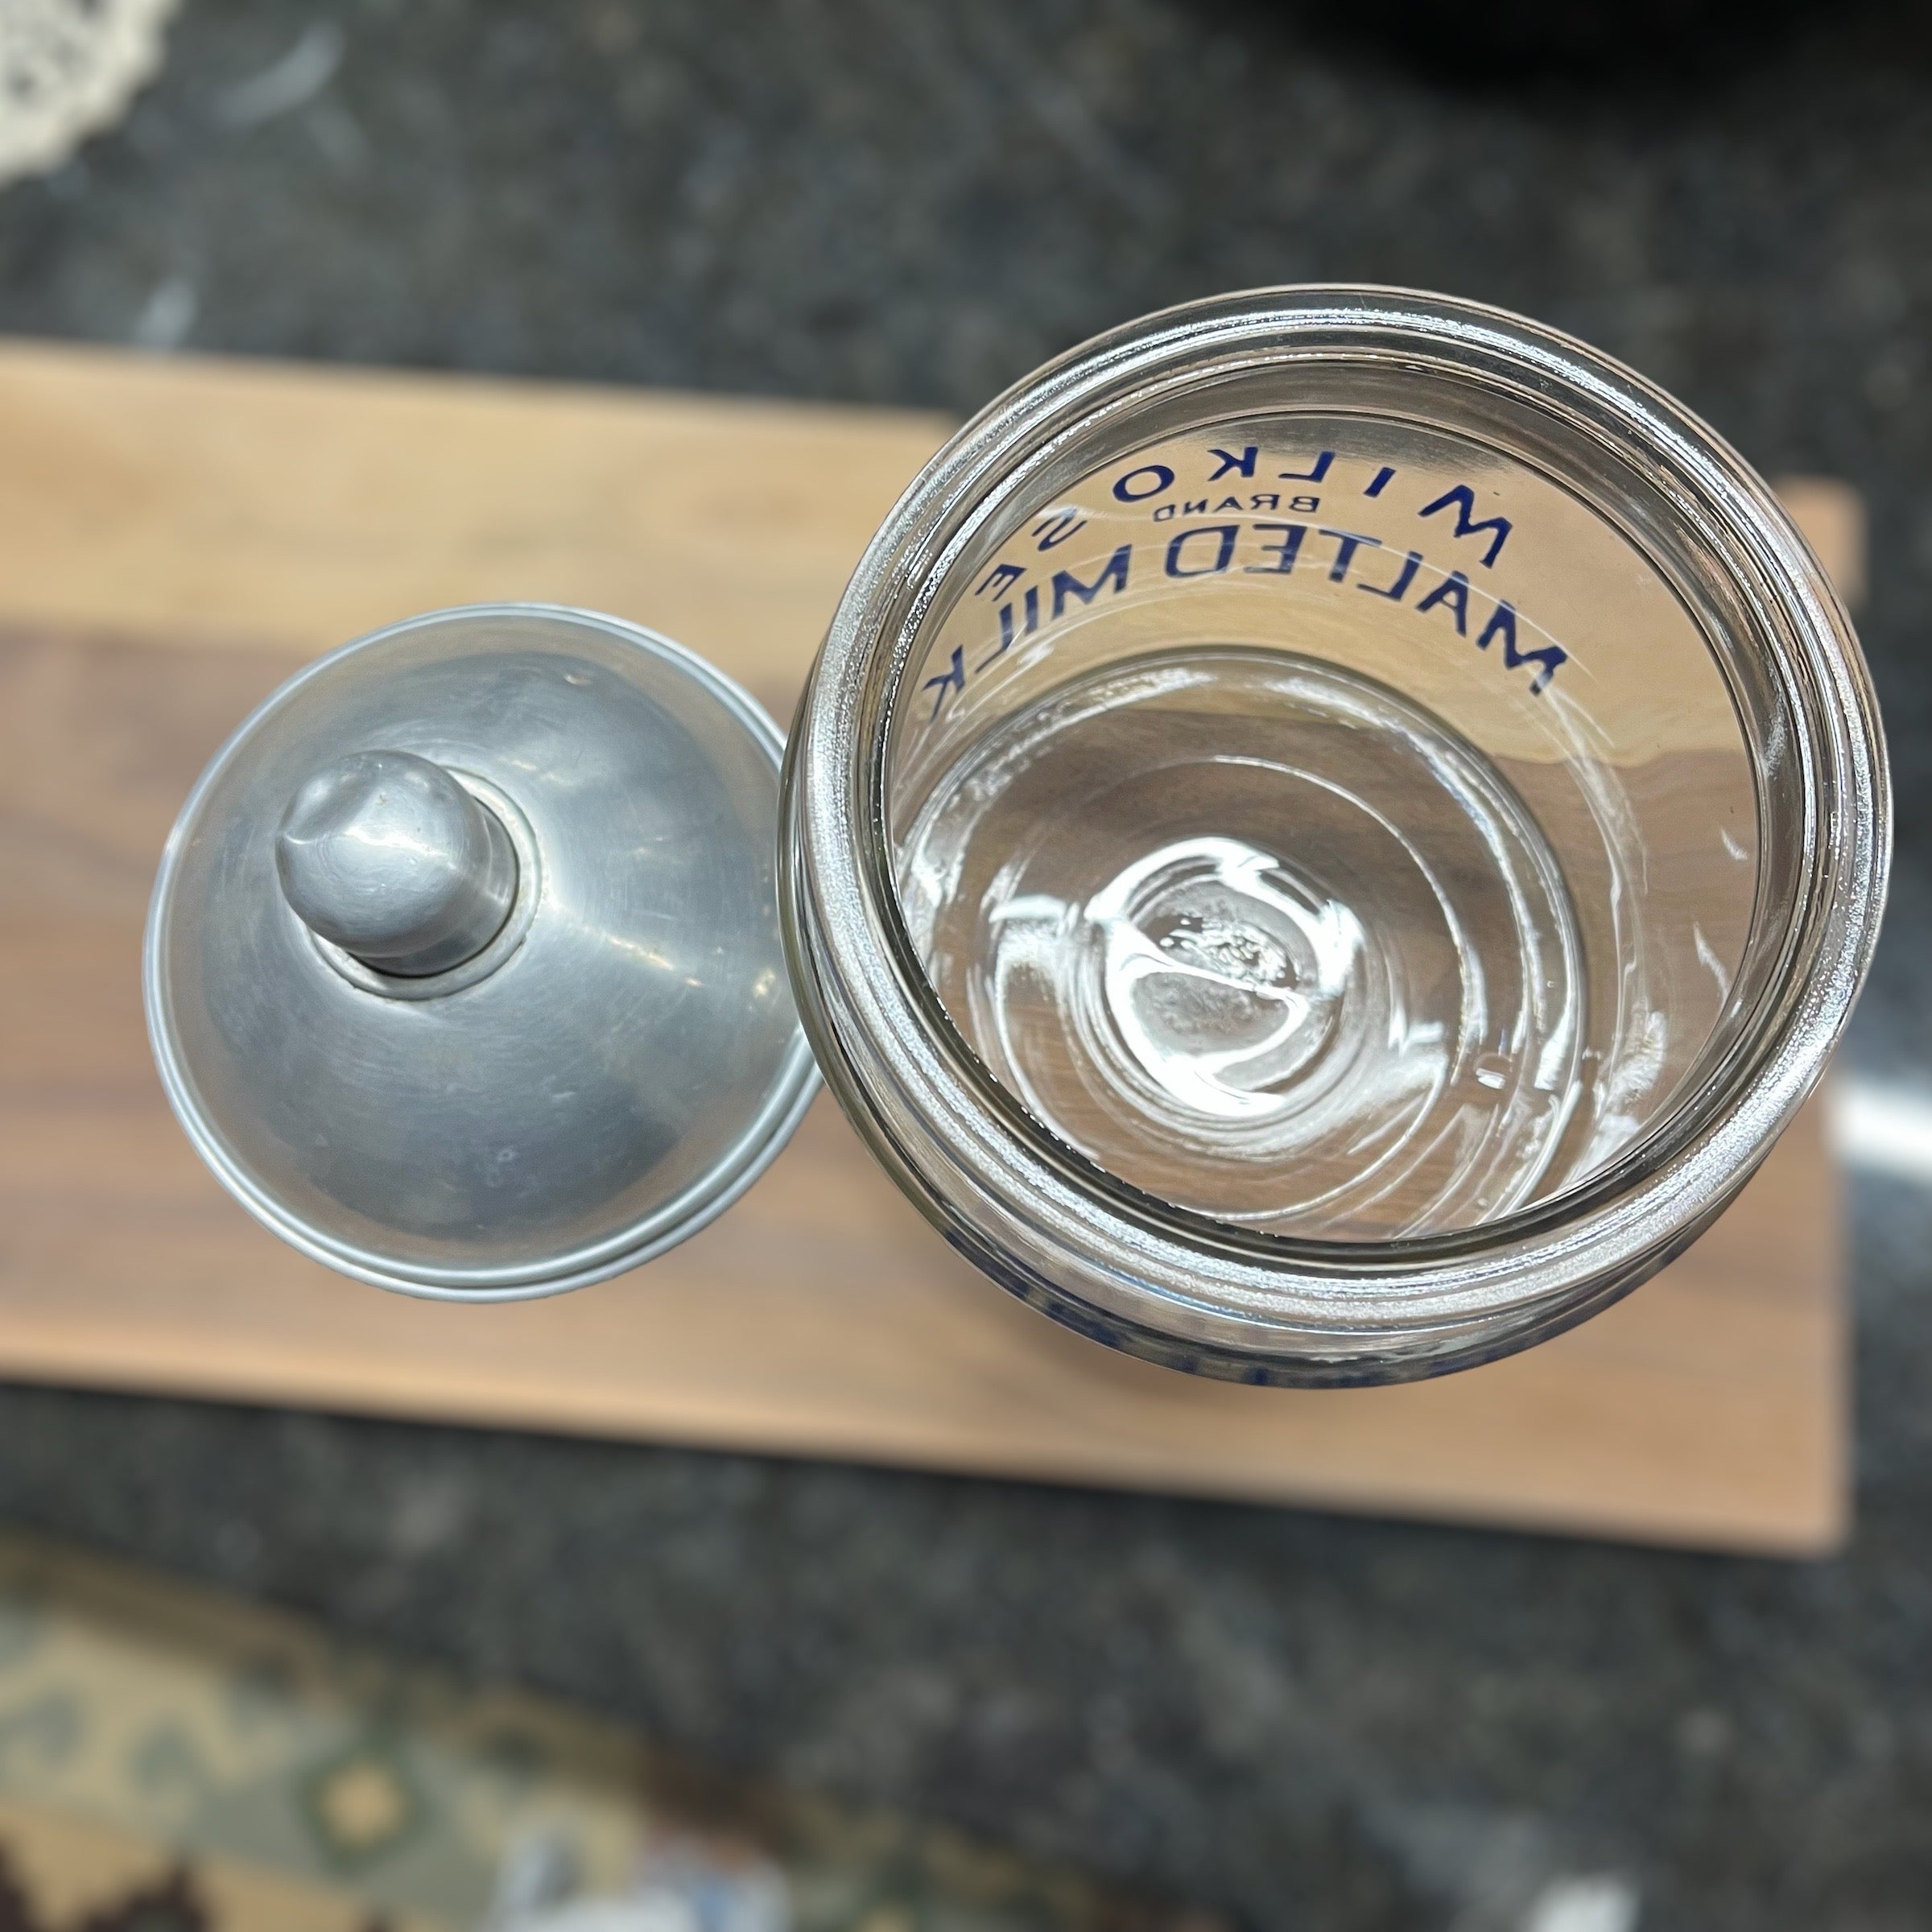 Antique "Milkose Brand Malted Milk" Glass Jar With Aluminum Lid